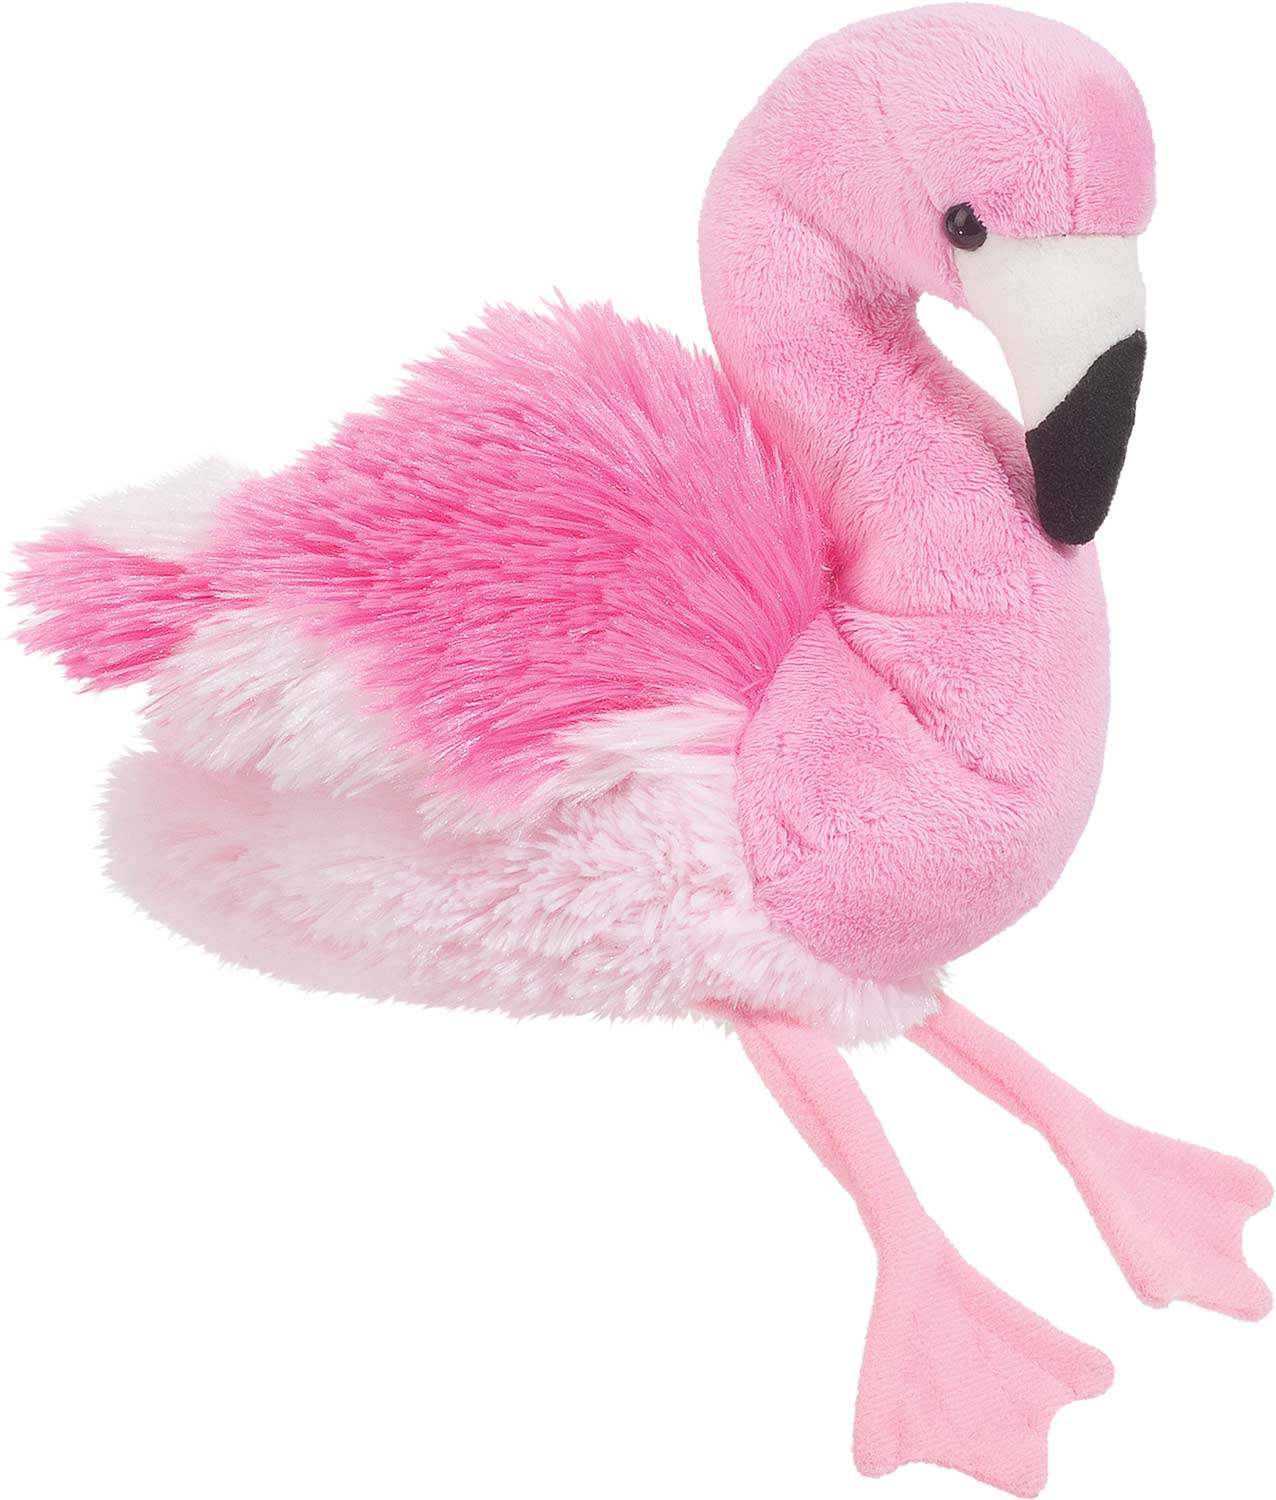 Cotton Candy Flamingo by Douglas #4093